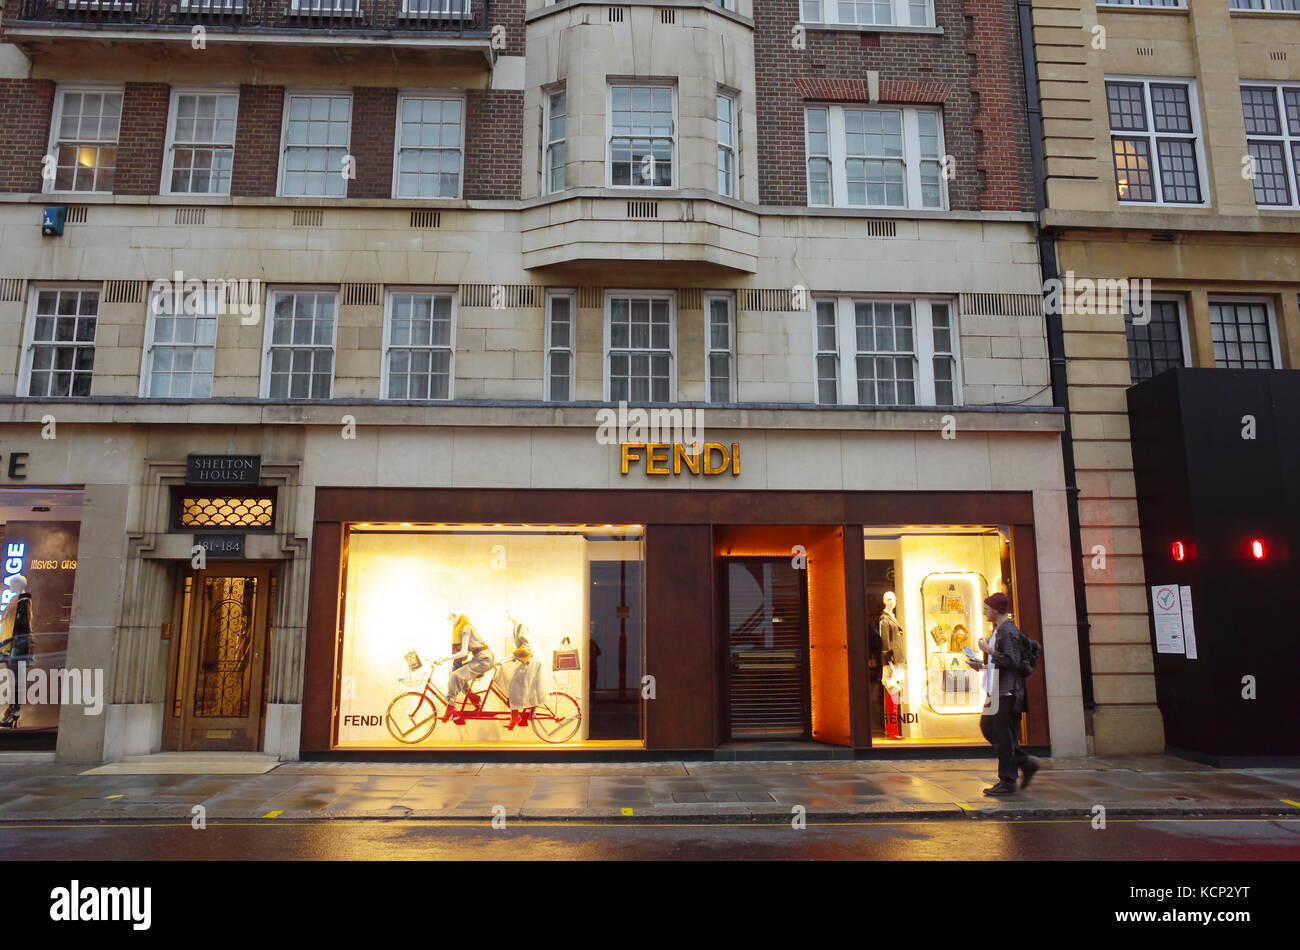 FENDI store on Sloane Street, London, UK Stock Photo - Alamy